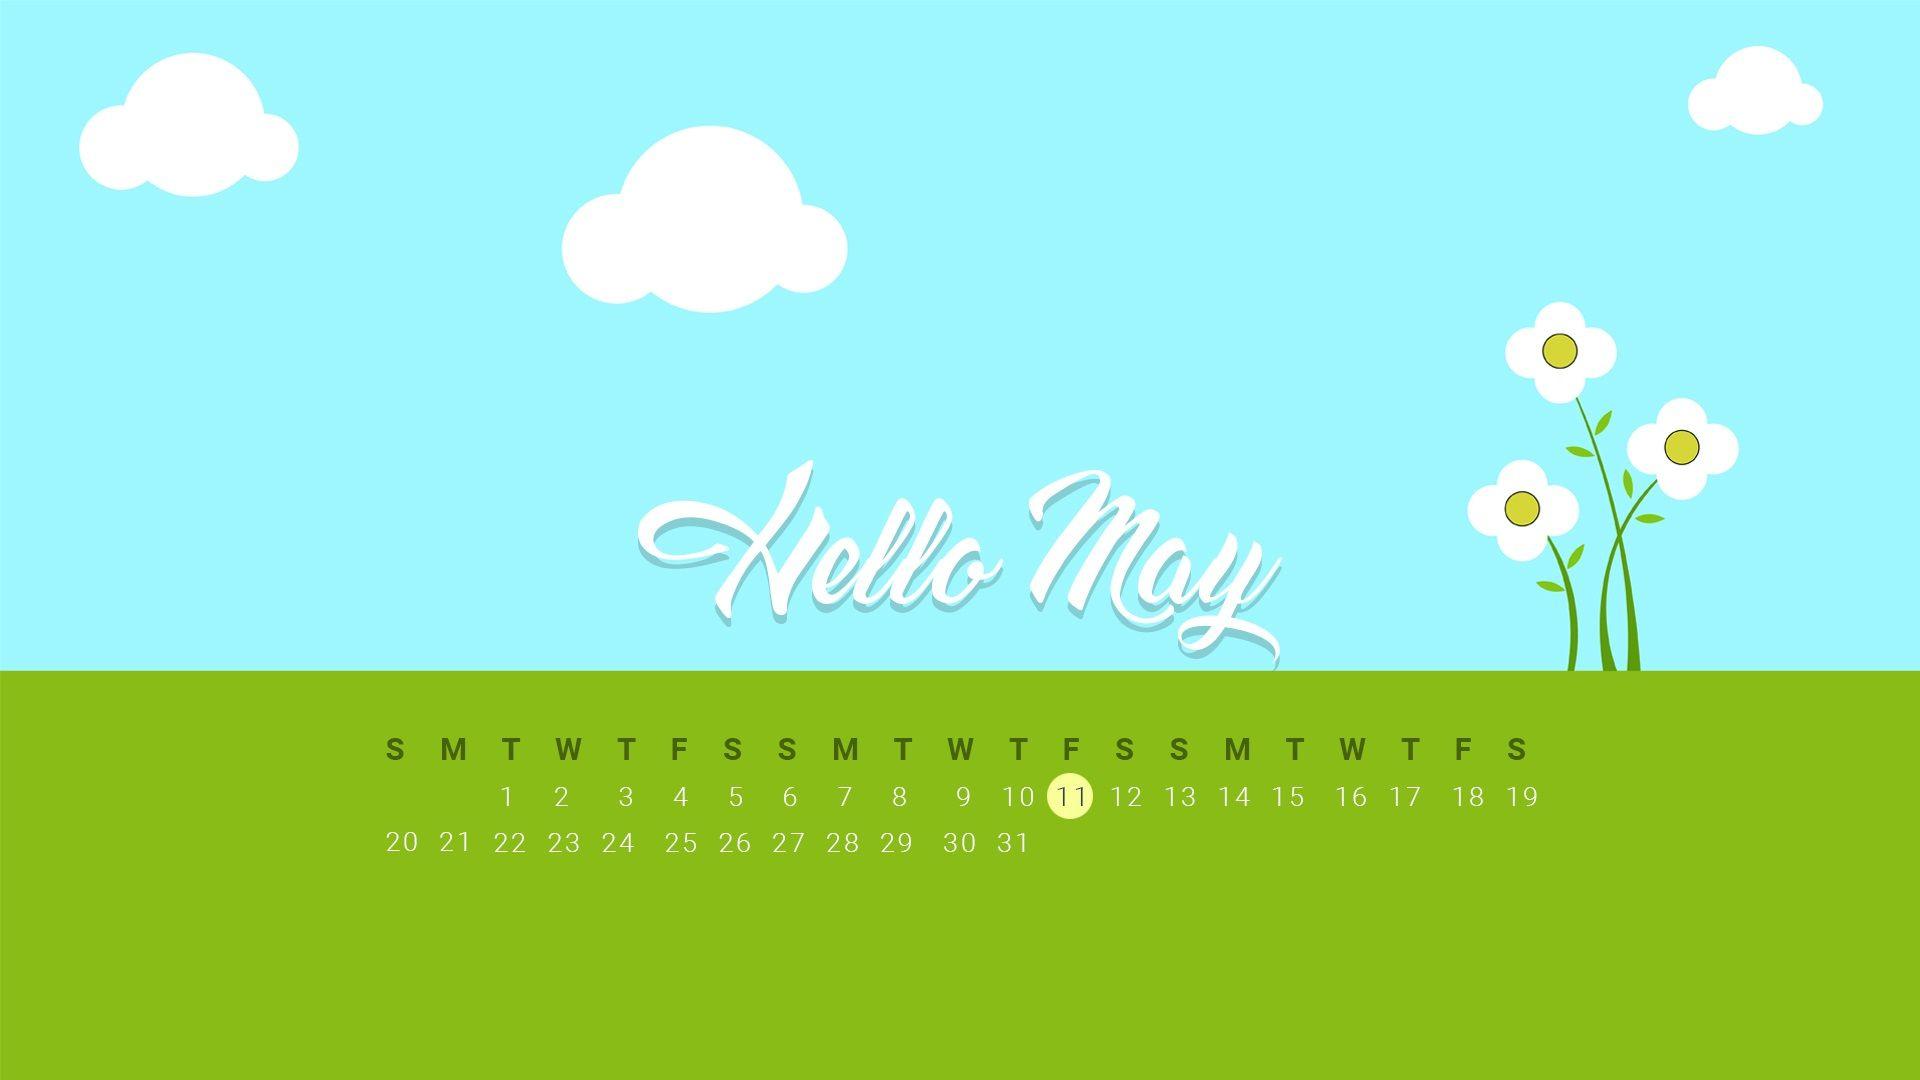 May 2018 Desktop Calendar Wallpaper